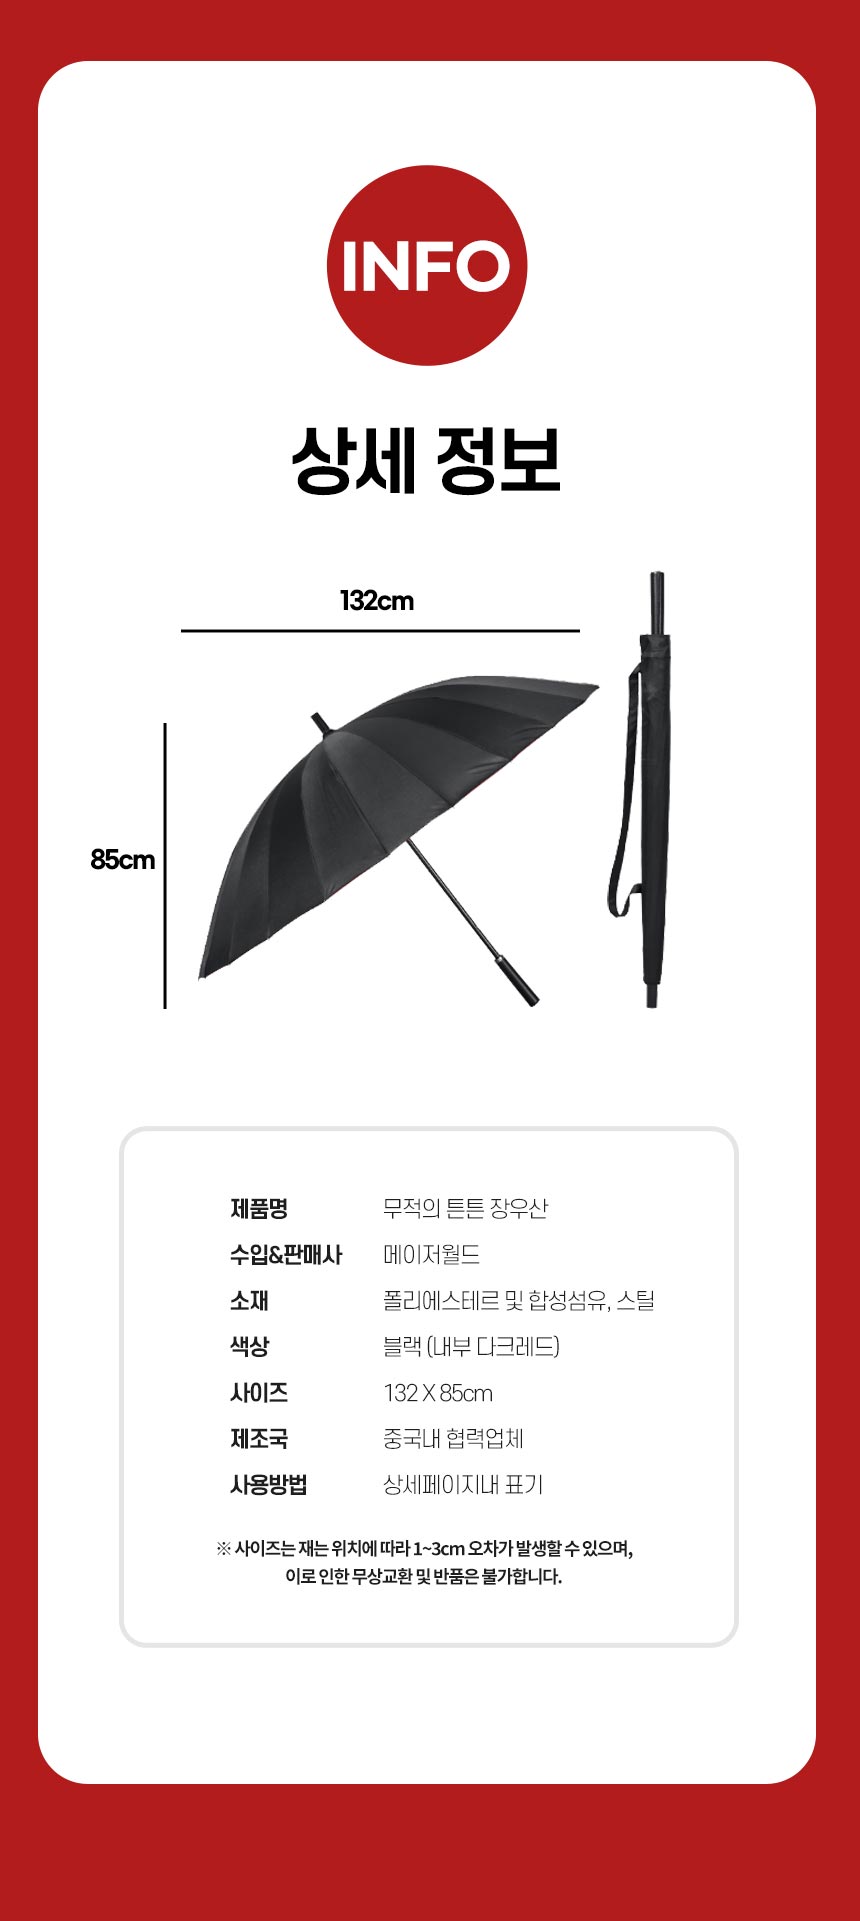 large-umbrella_22_1_33.jpg